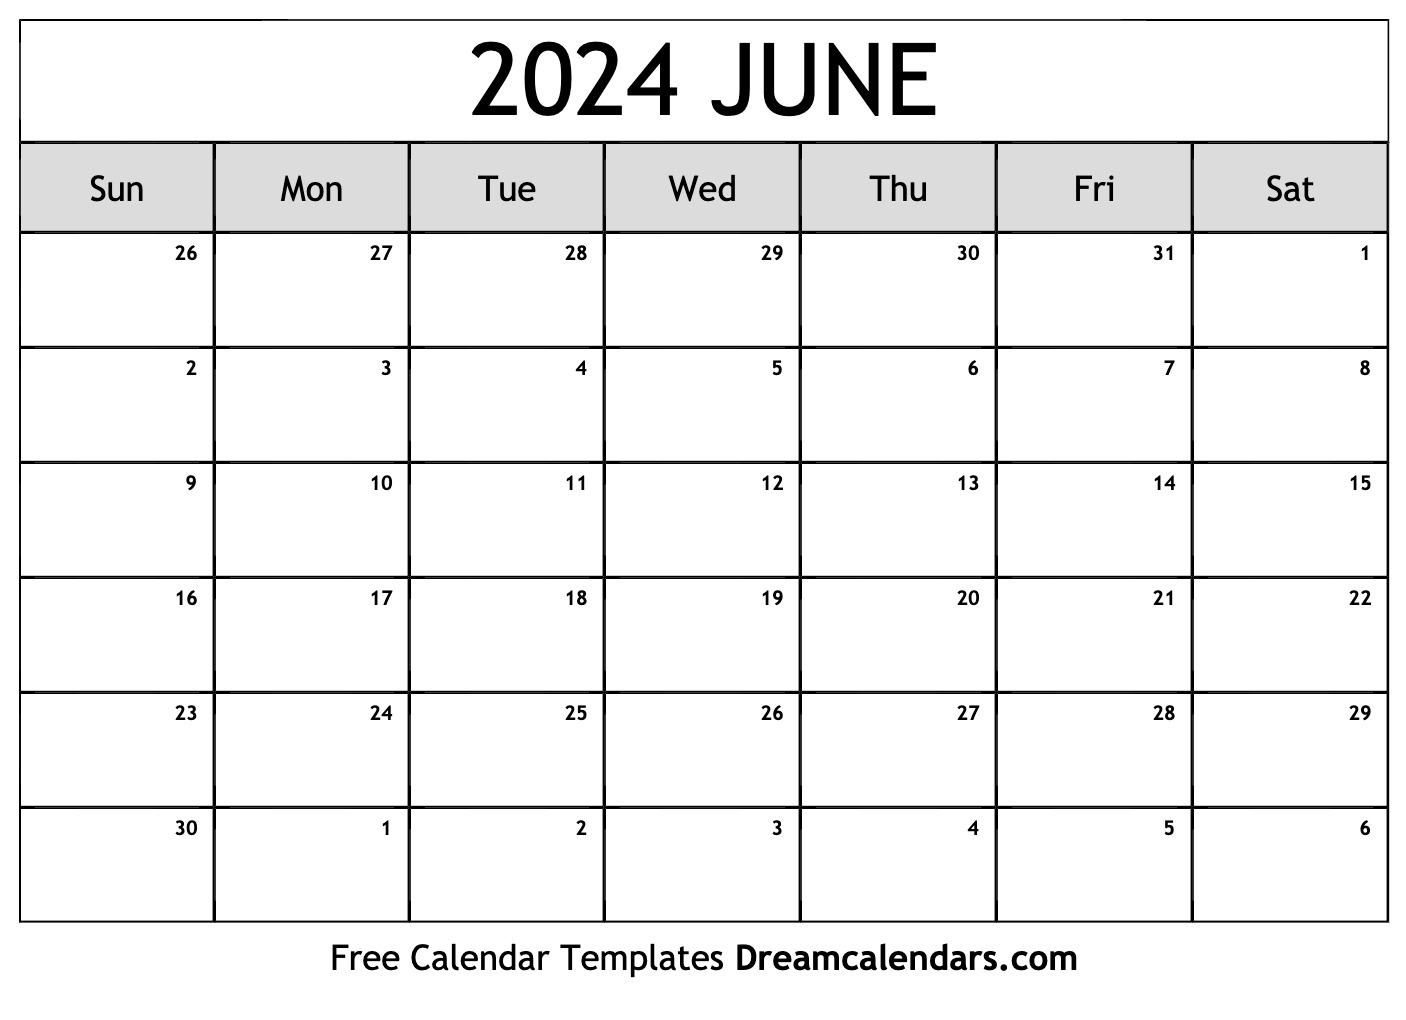 June 2024 Calendar | Free Blank Printable With Holidays pertaining to Free Printable Calendar 2024 June Word